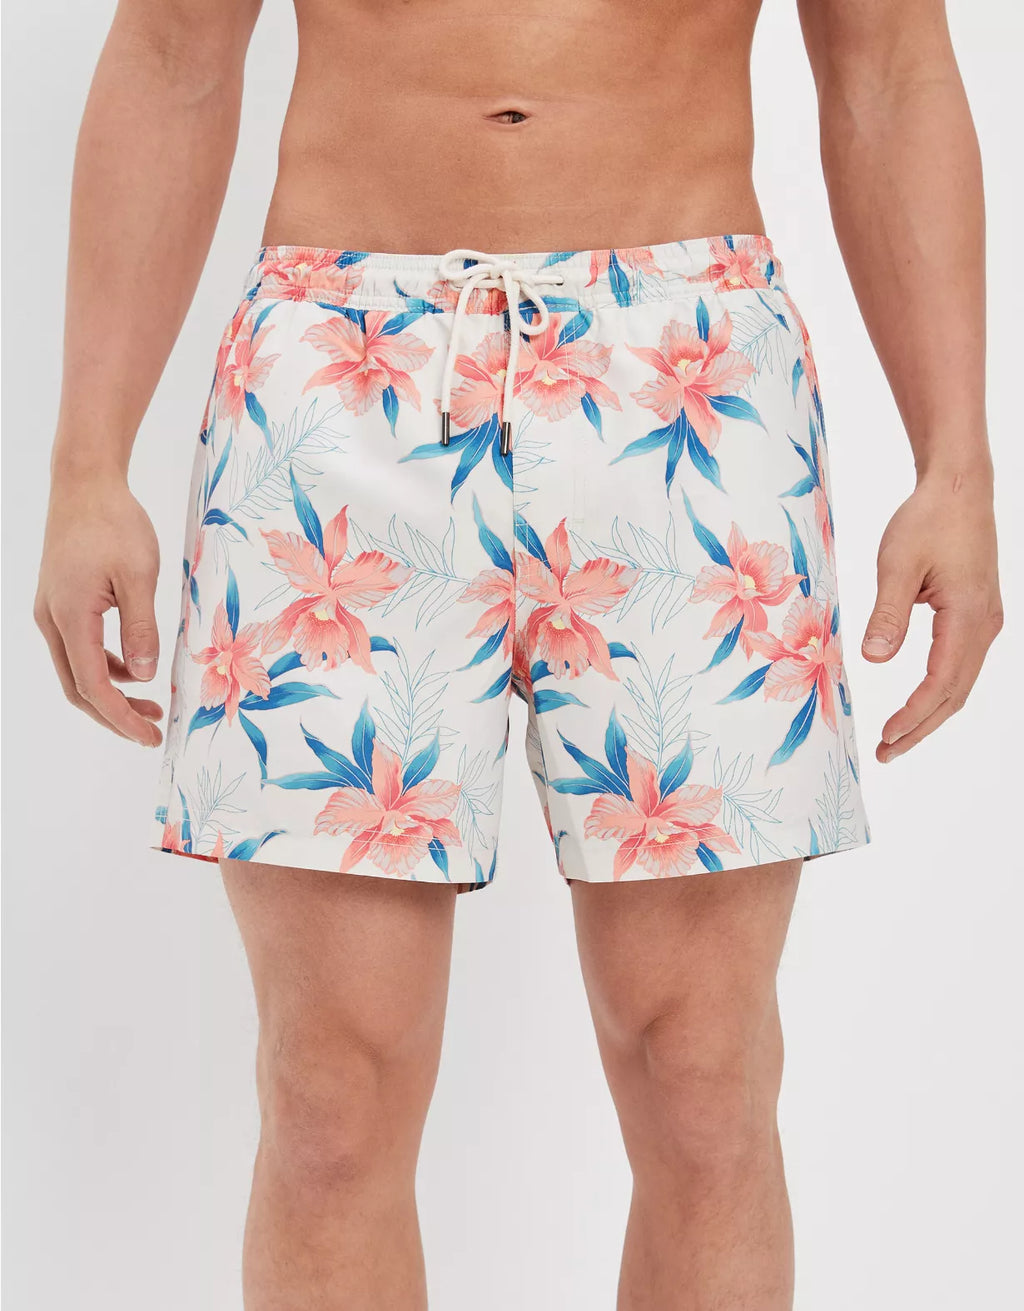 mens swimwear - swimwear men - the beach company - swim shorts - board shorts